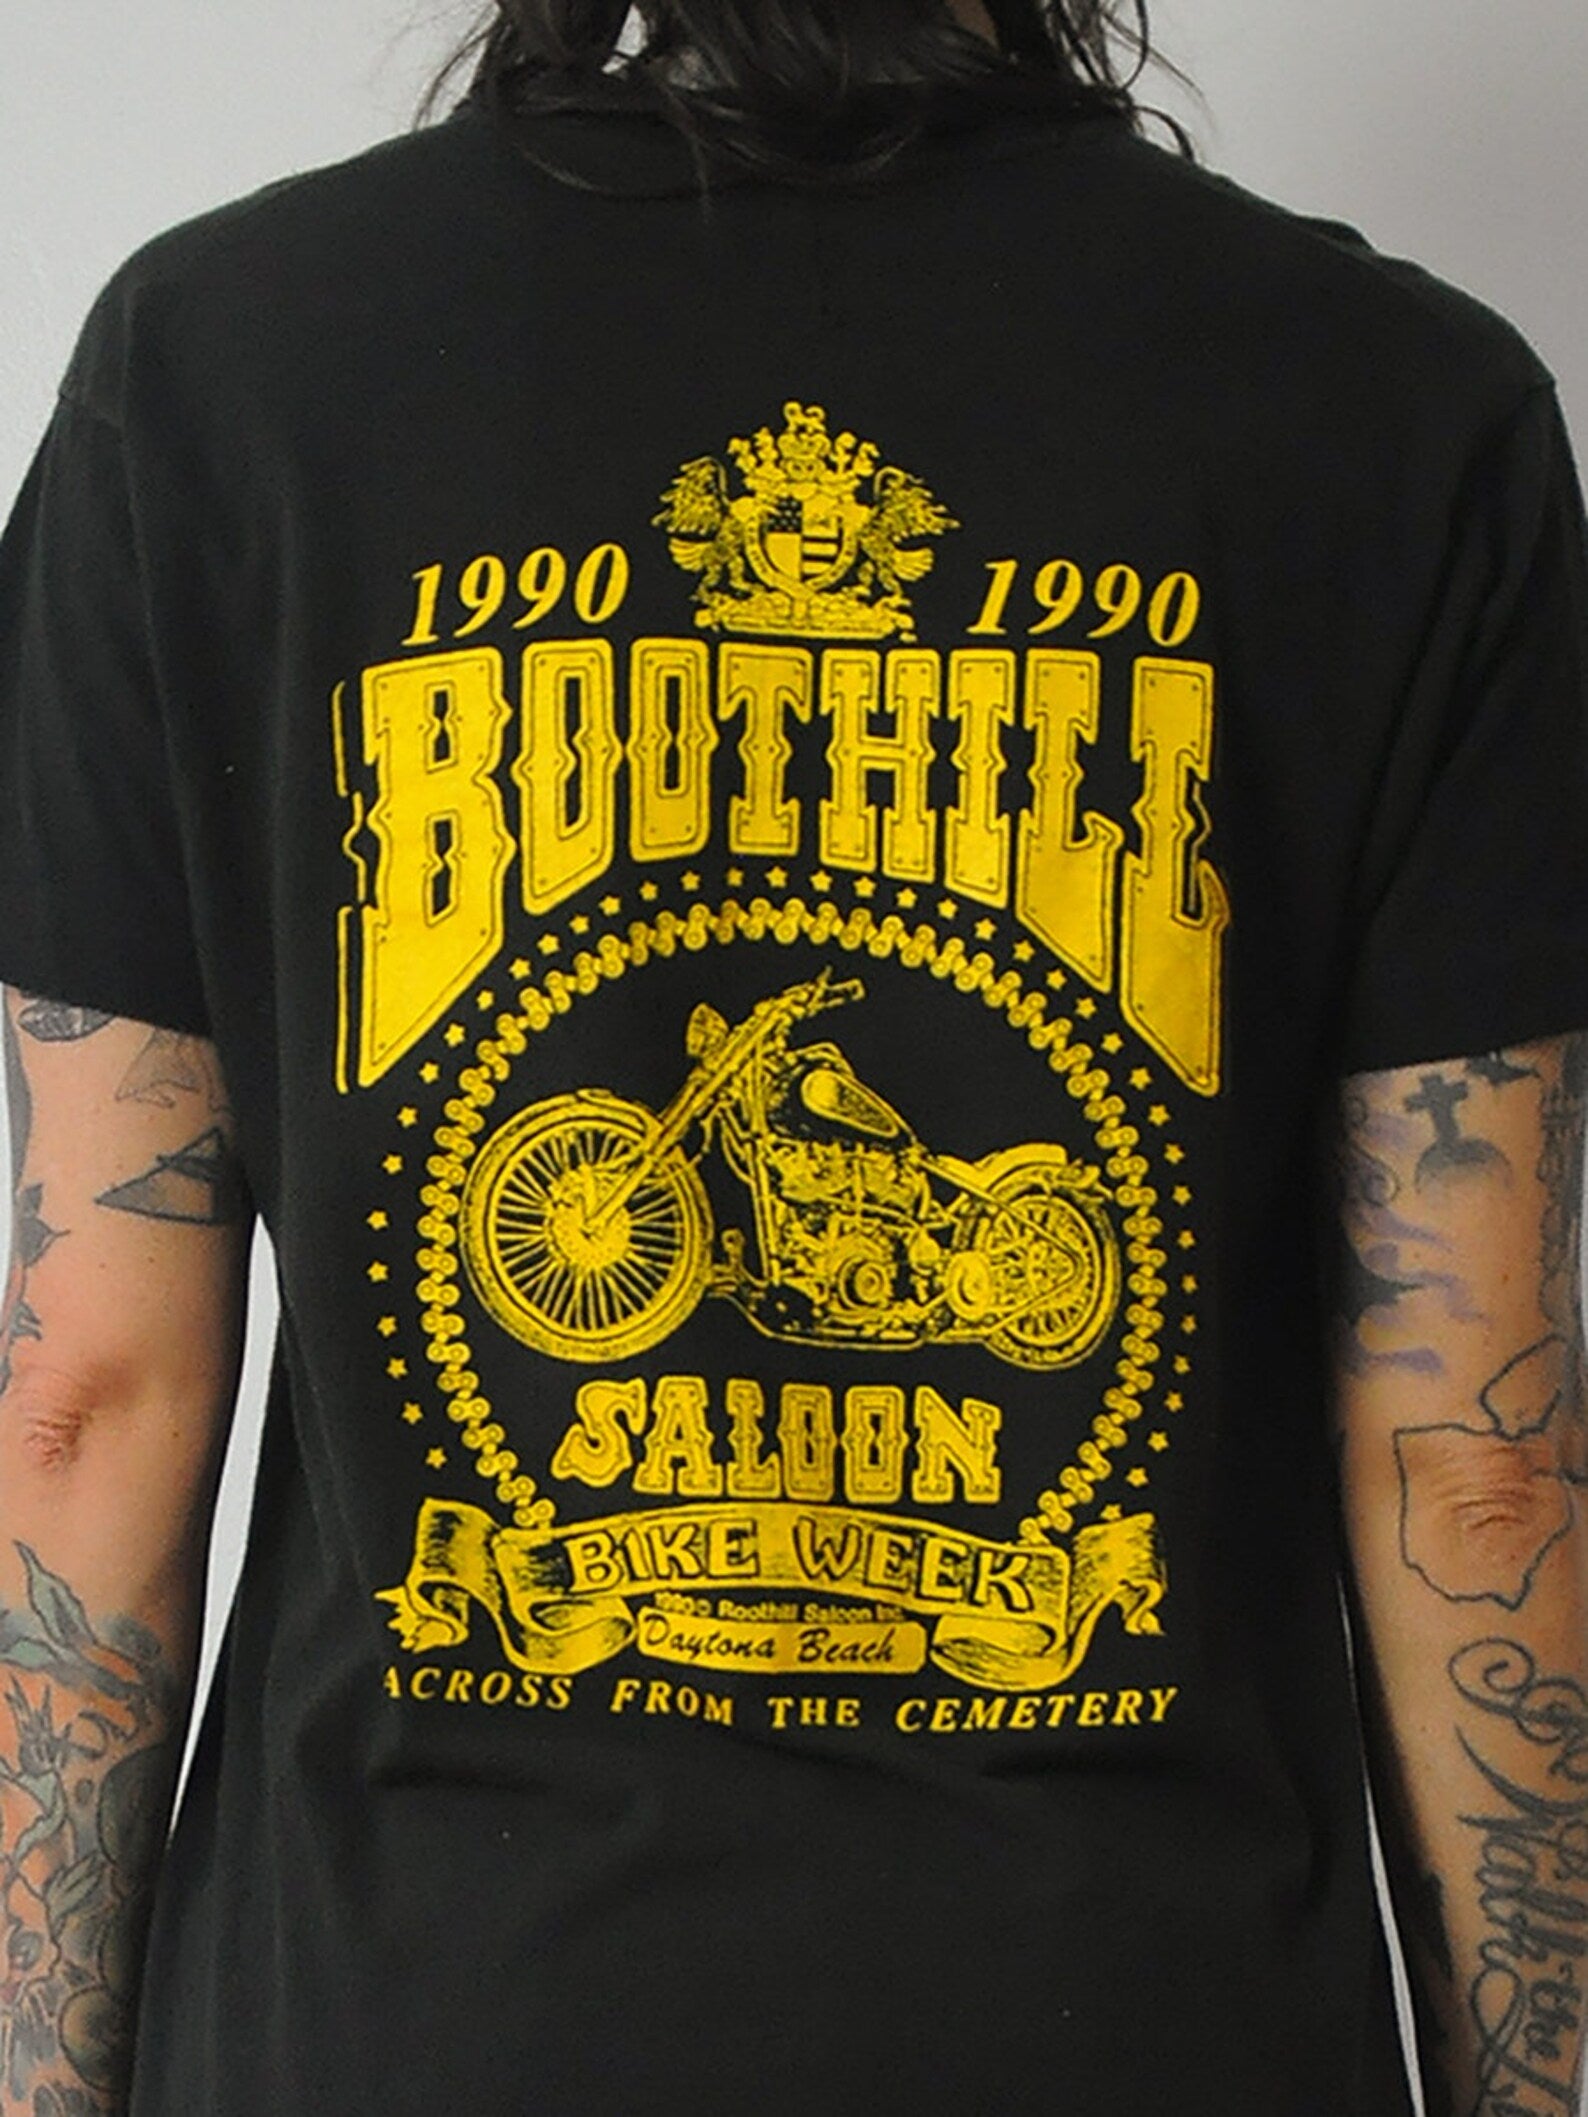 1990 Boothill Saloon Bike Week Tee